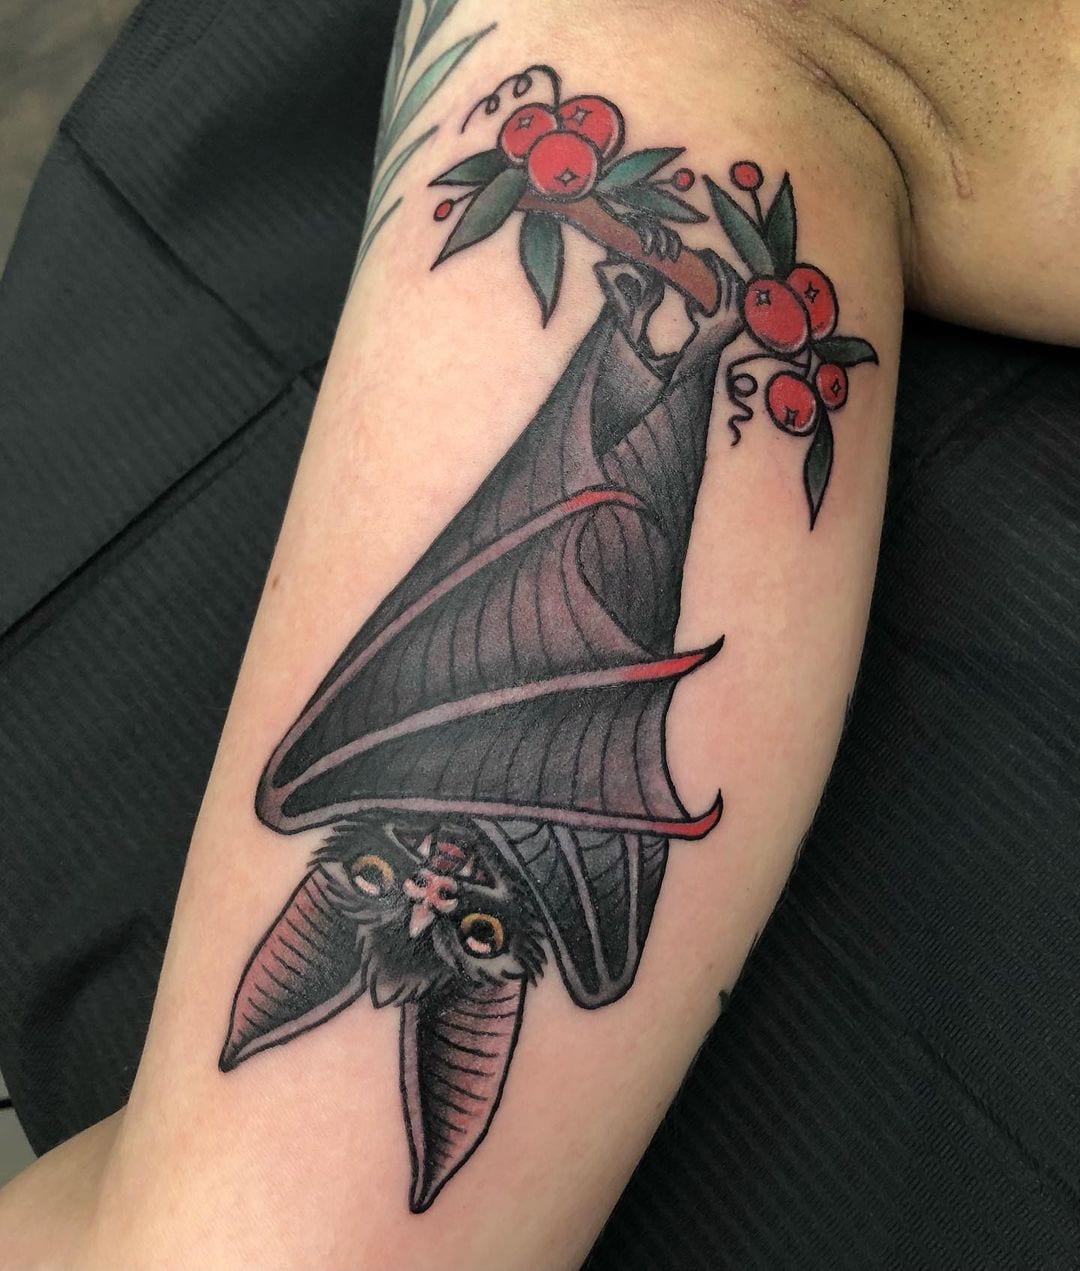 Bat Tattoo by Chris on Dribbble